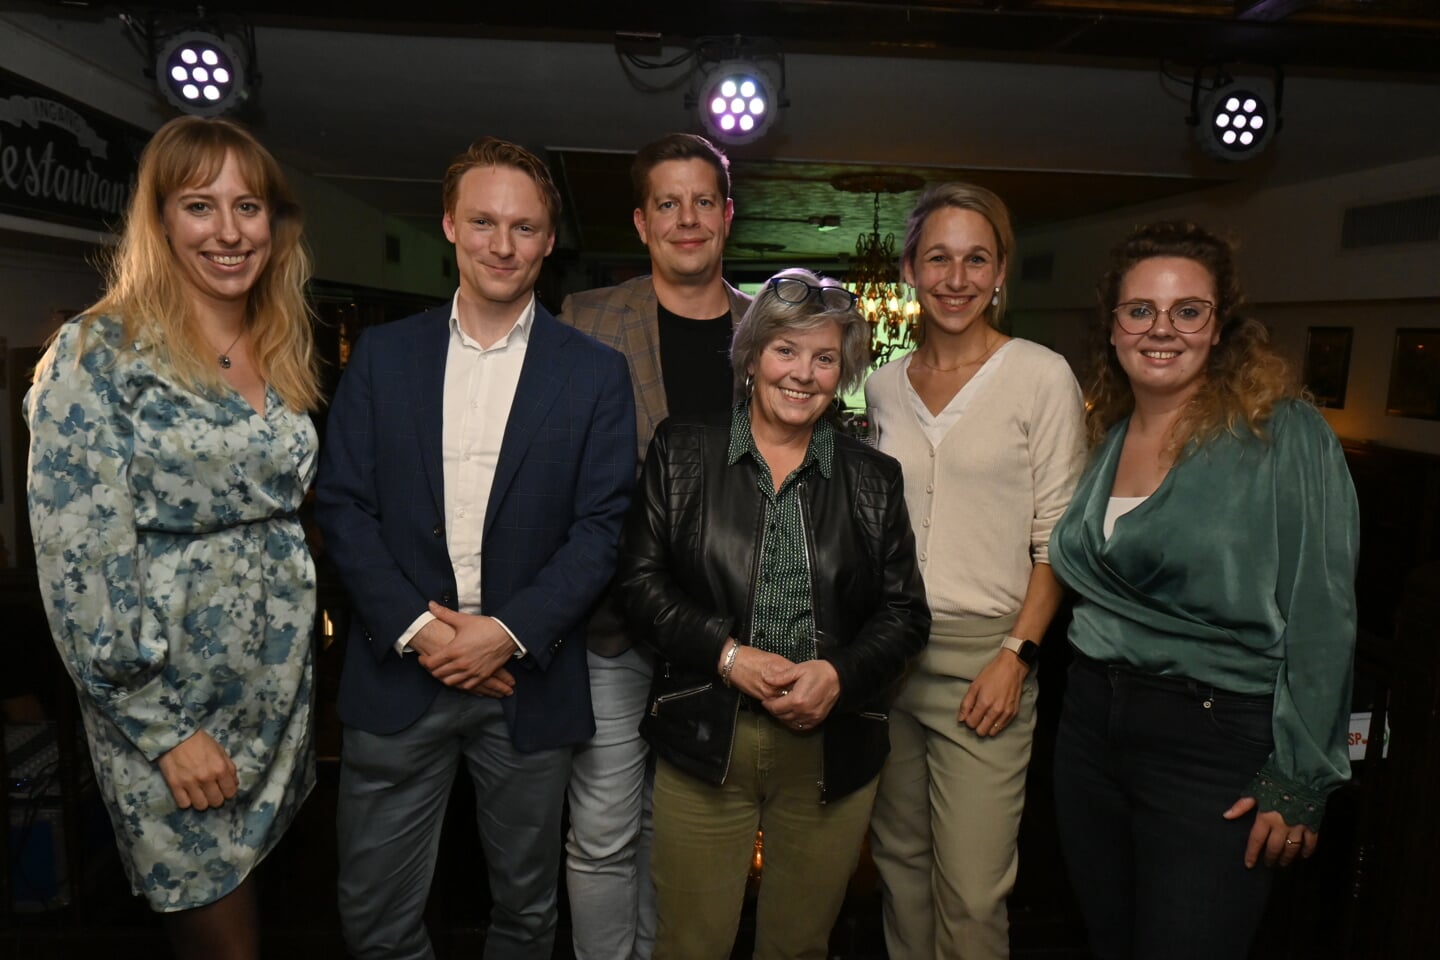 Vlnr Anne-Lise Olsthoorn (D66), Rembrandt Rowaan (GroenLinks/PvdA), Berend Aptroot (VVD), Petra van de Wereld (BBB), Liesbeth van der Heide (CDA) en Debbie van Dijk (SP)